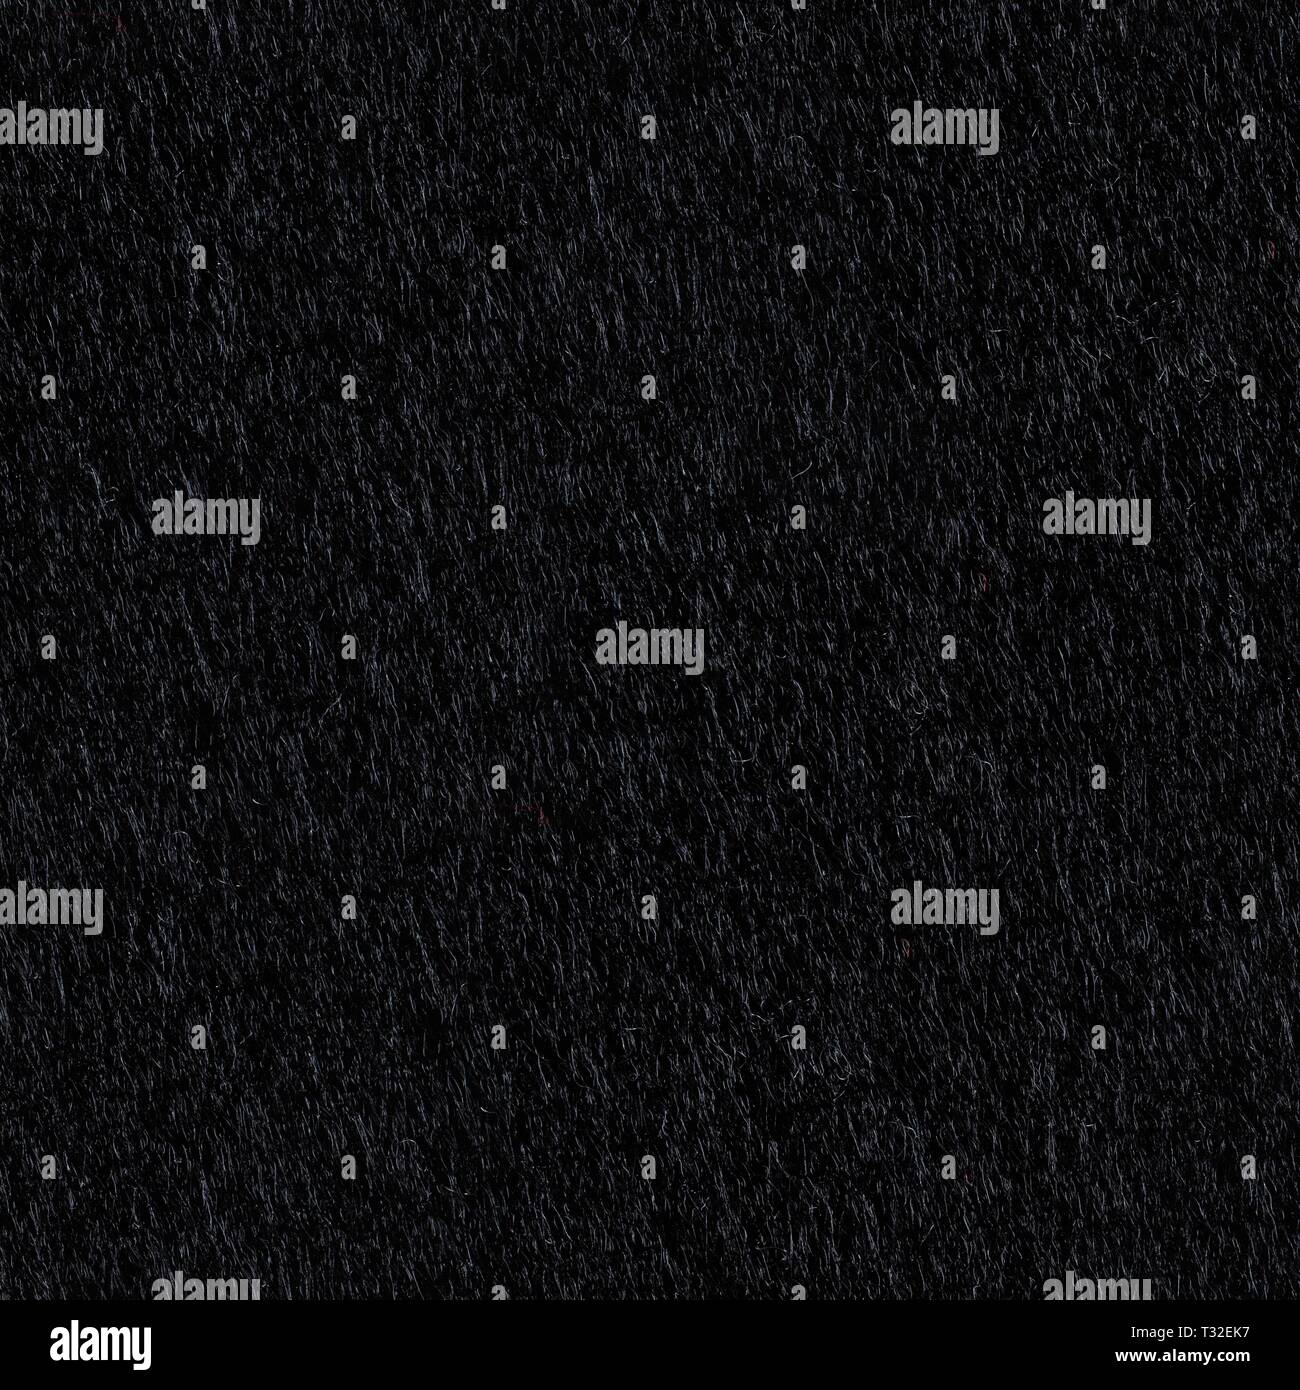 Black Felt Fabric On Isolated Background Stock Photo - Download